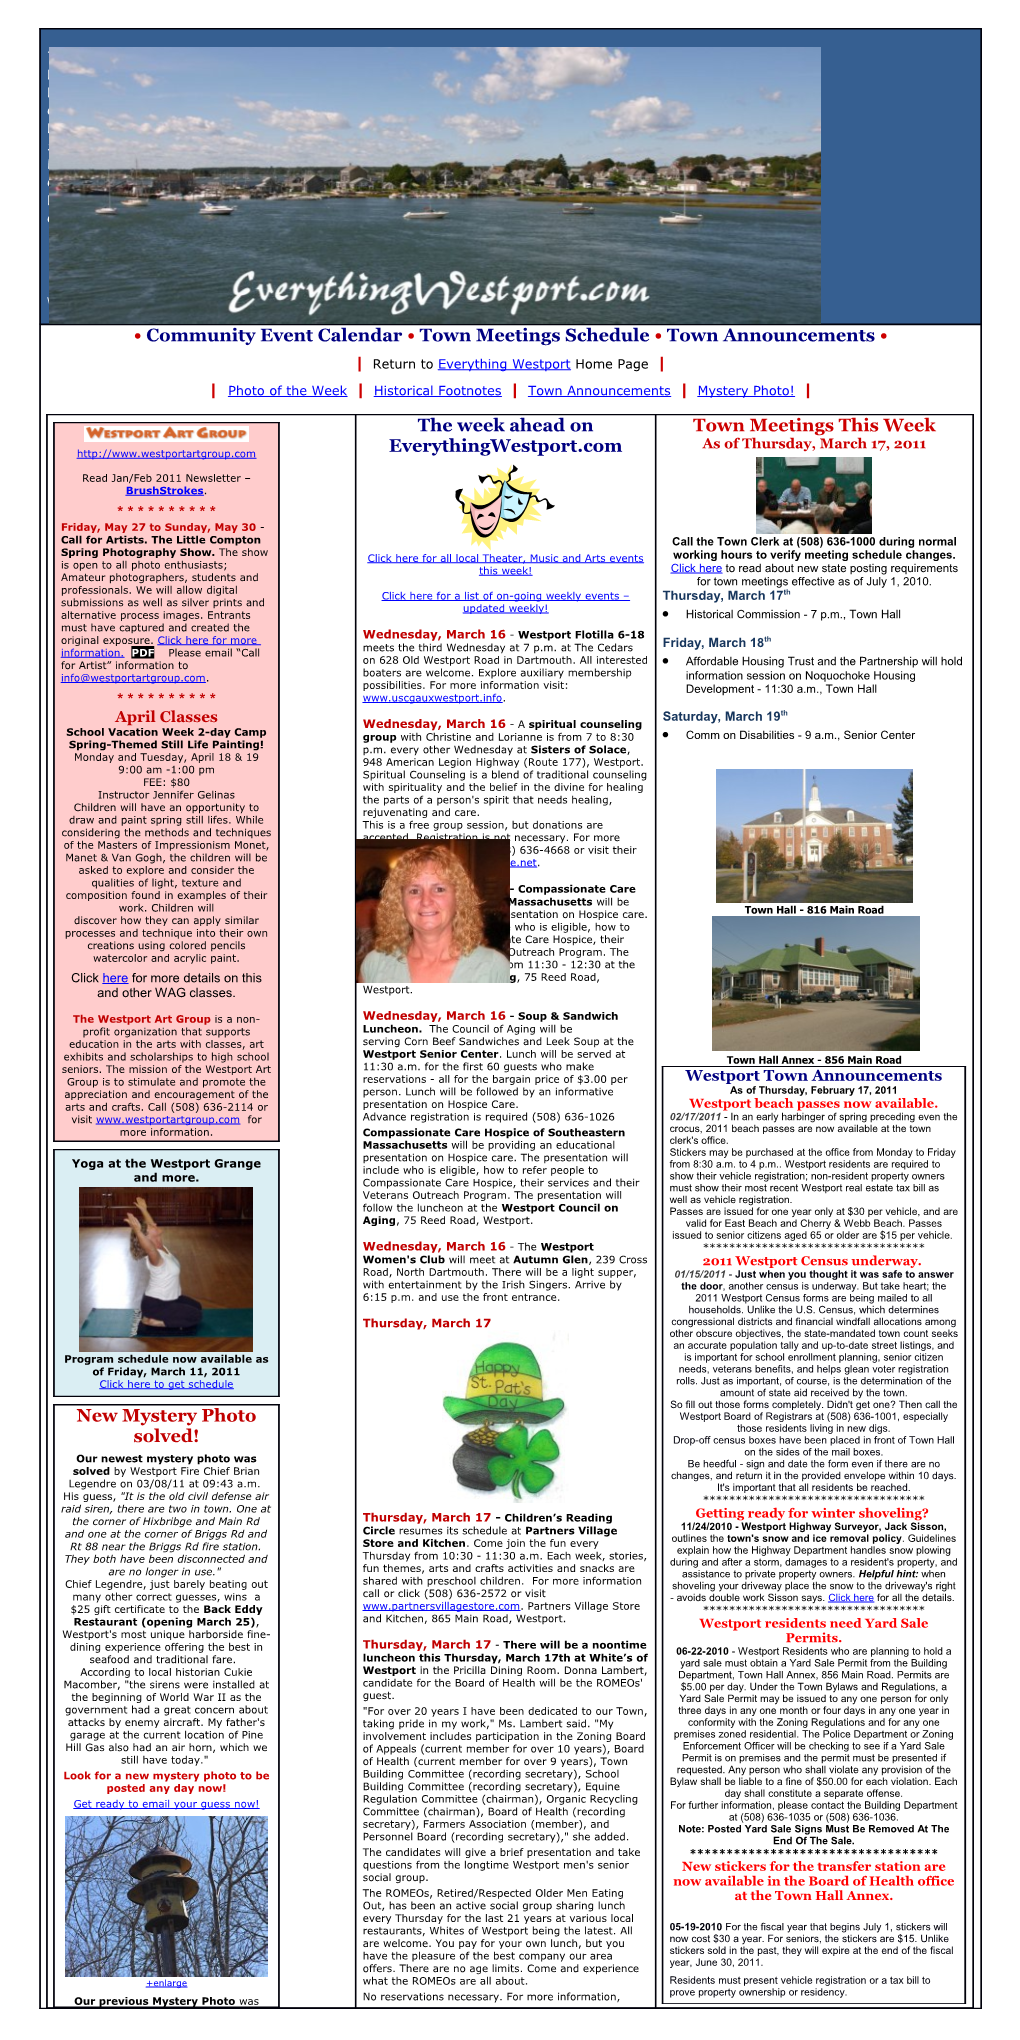 Community Events of Westport - Calendar of Events